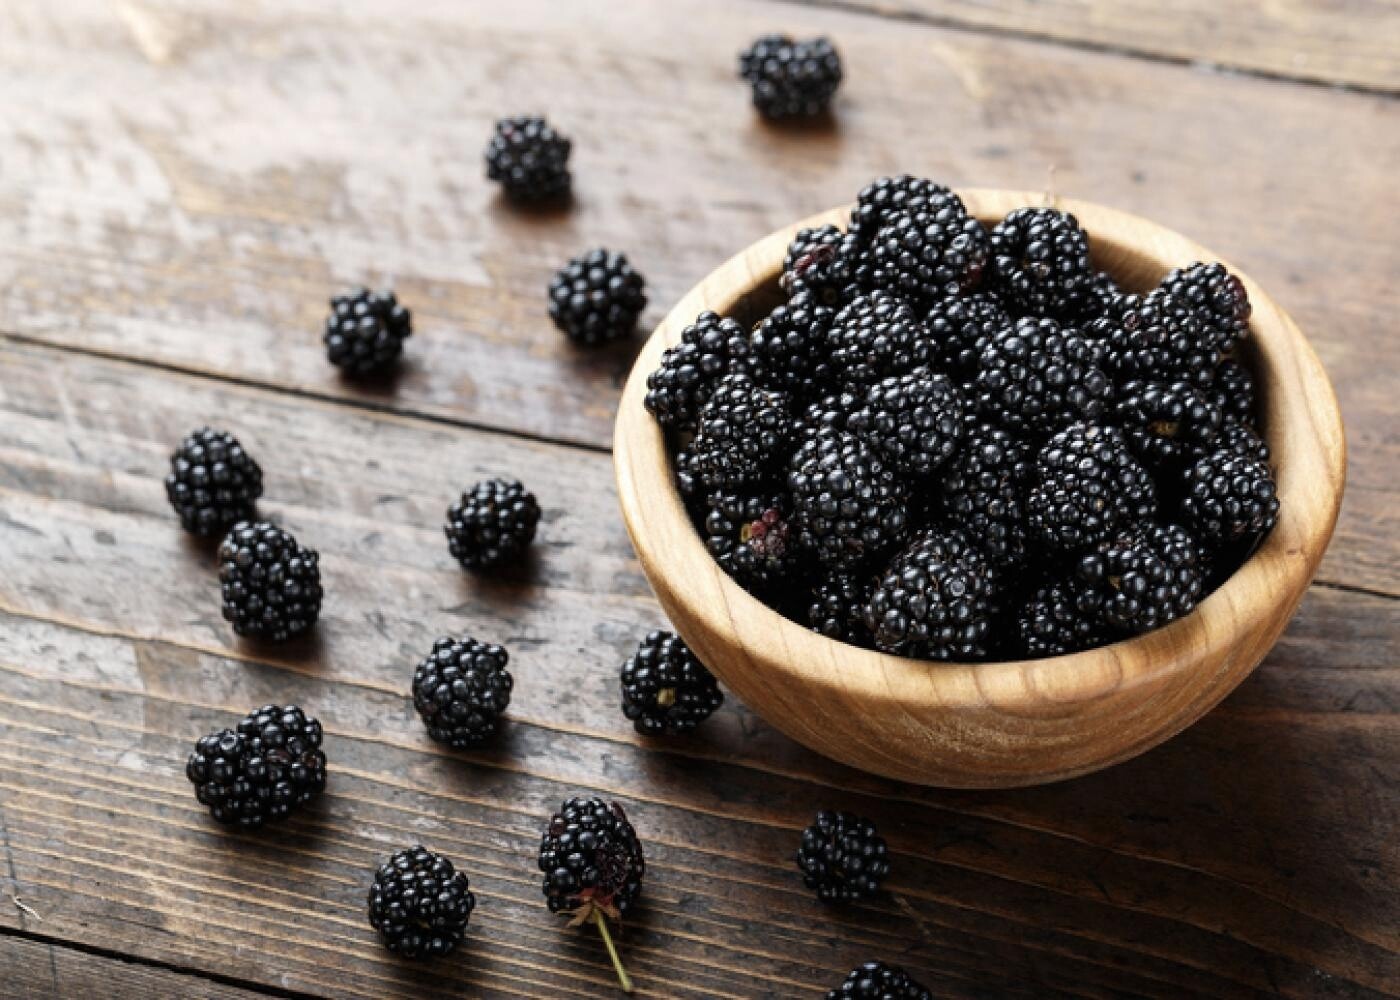 Blackberries - Organic - 6 oz.